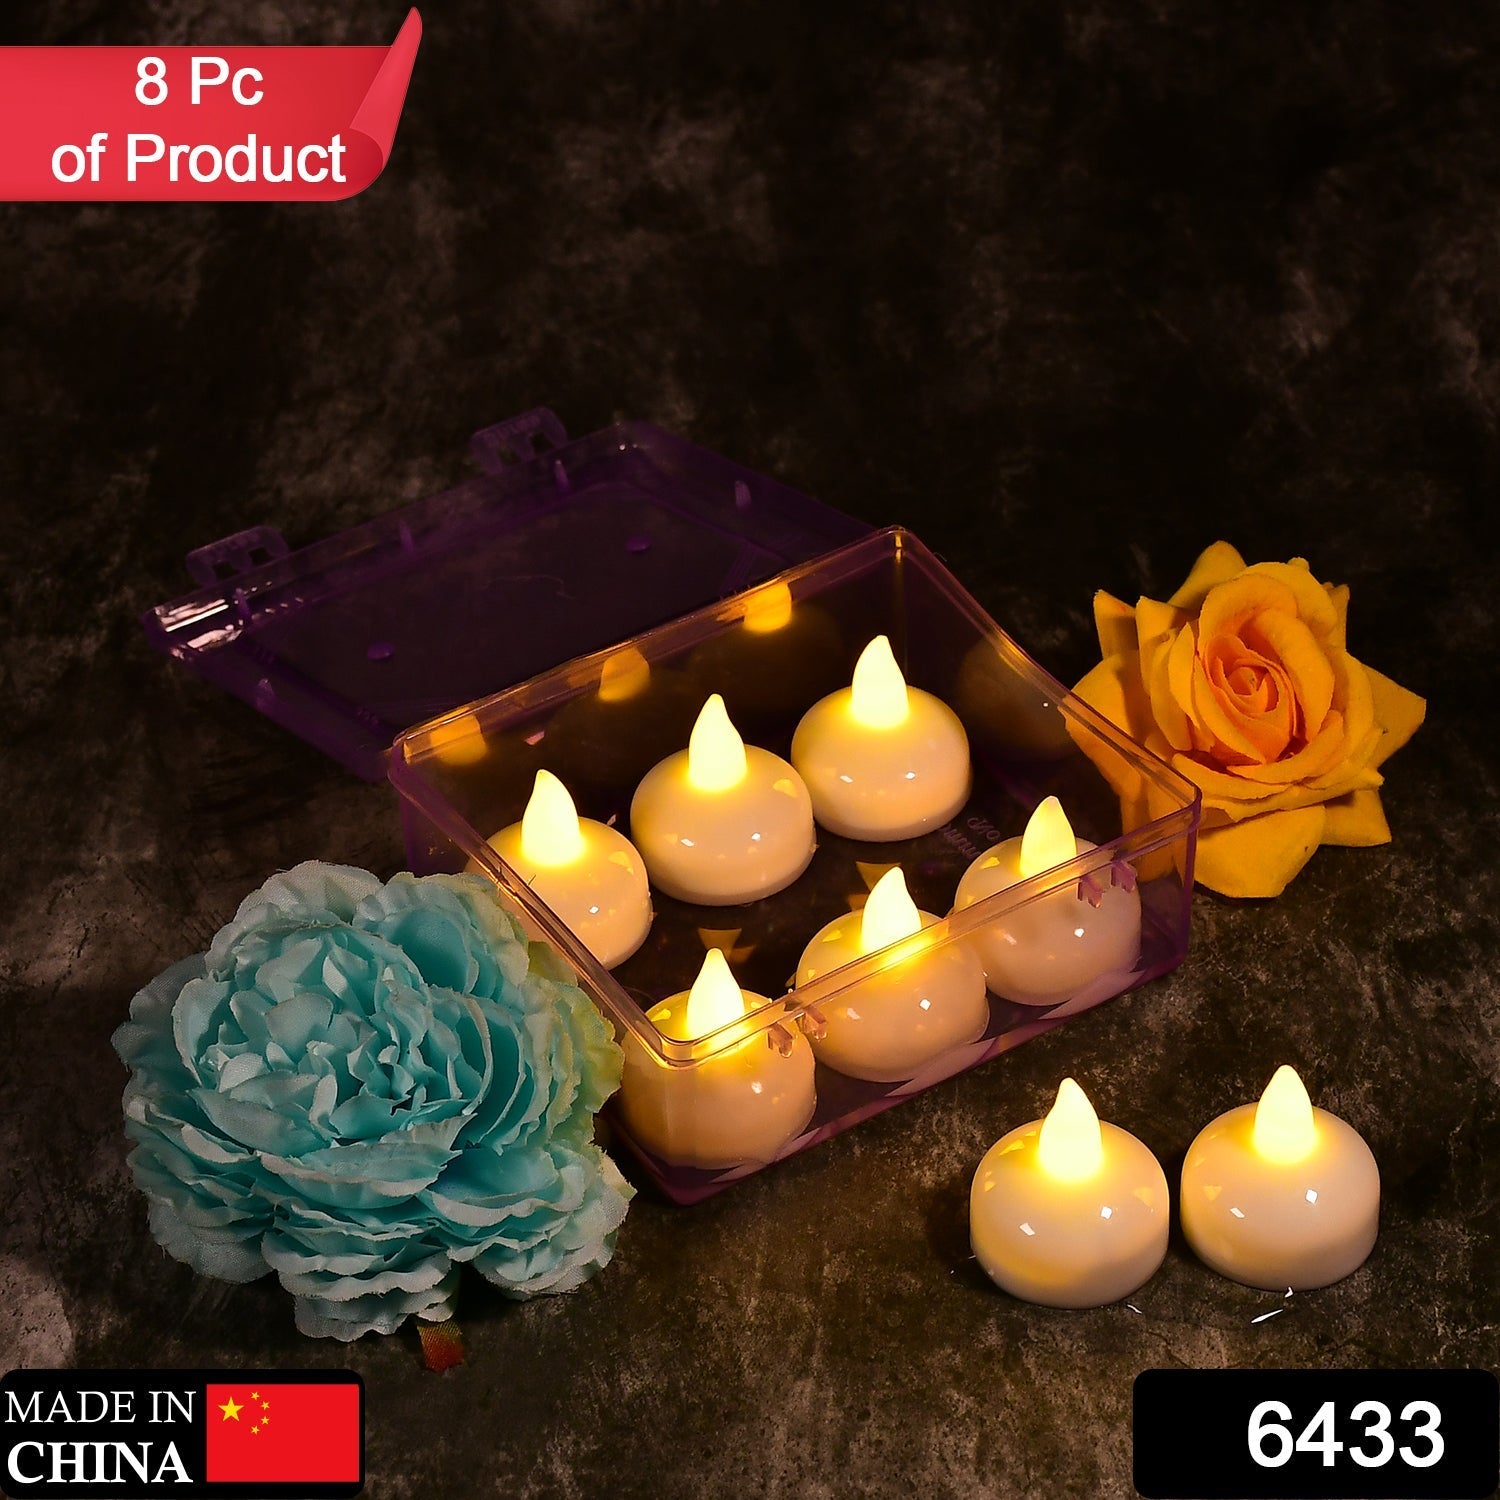 6433 Set of 8Pcs With transparent box. Flameless Floating Candles Battery Operated Tea Lights Tealight Candle - Decorative, Wedding. DeoDap